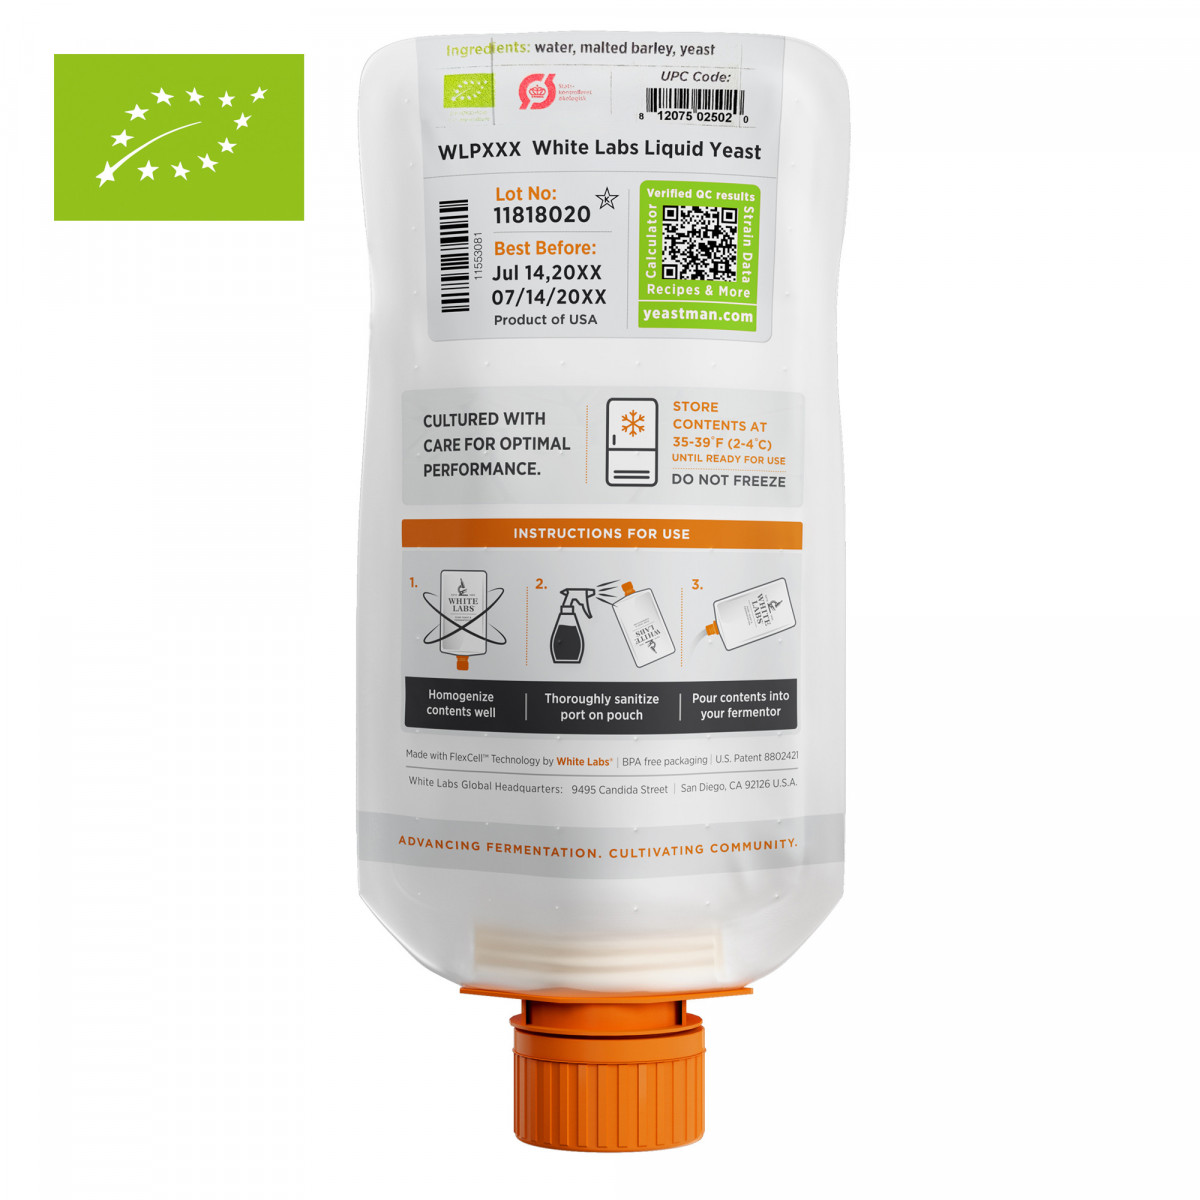 Organic Liquid Yeast WLP644-O Saccharomyces “bruxellensis” Trois - White Labs PurePitch™ Next Generation